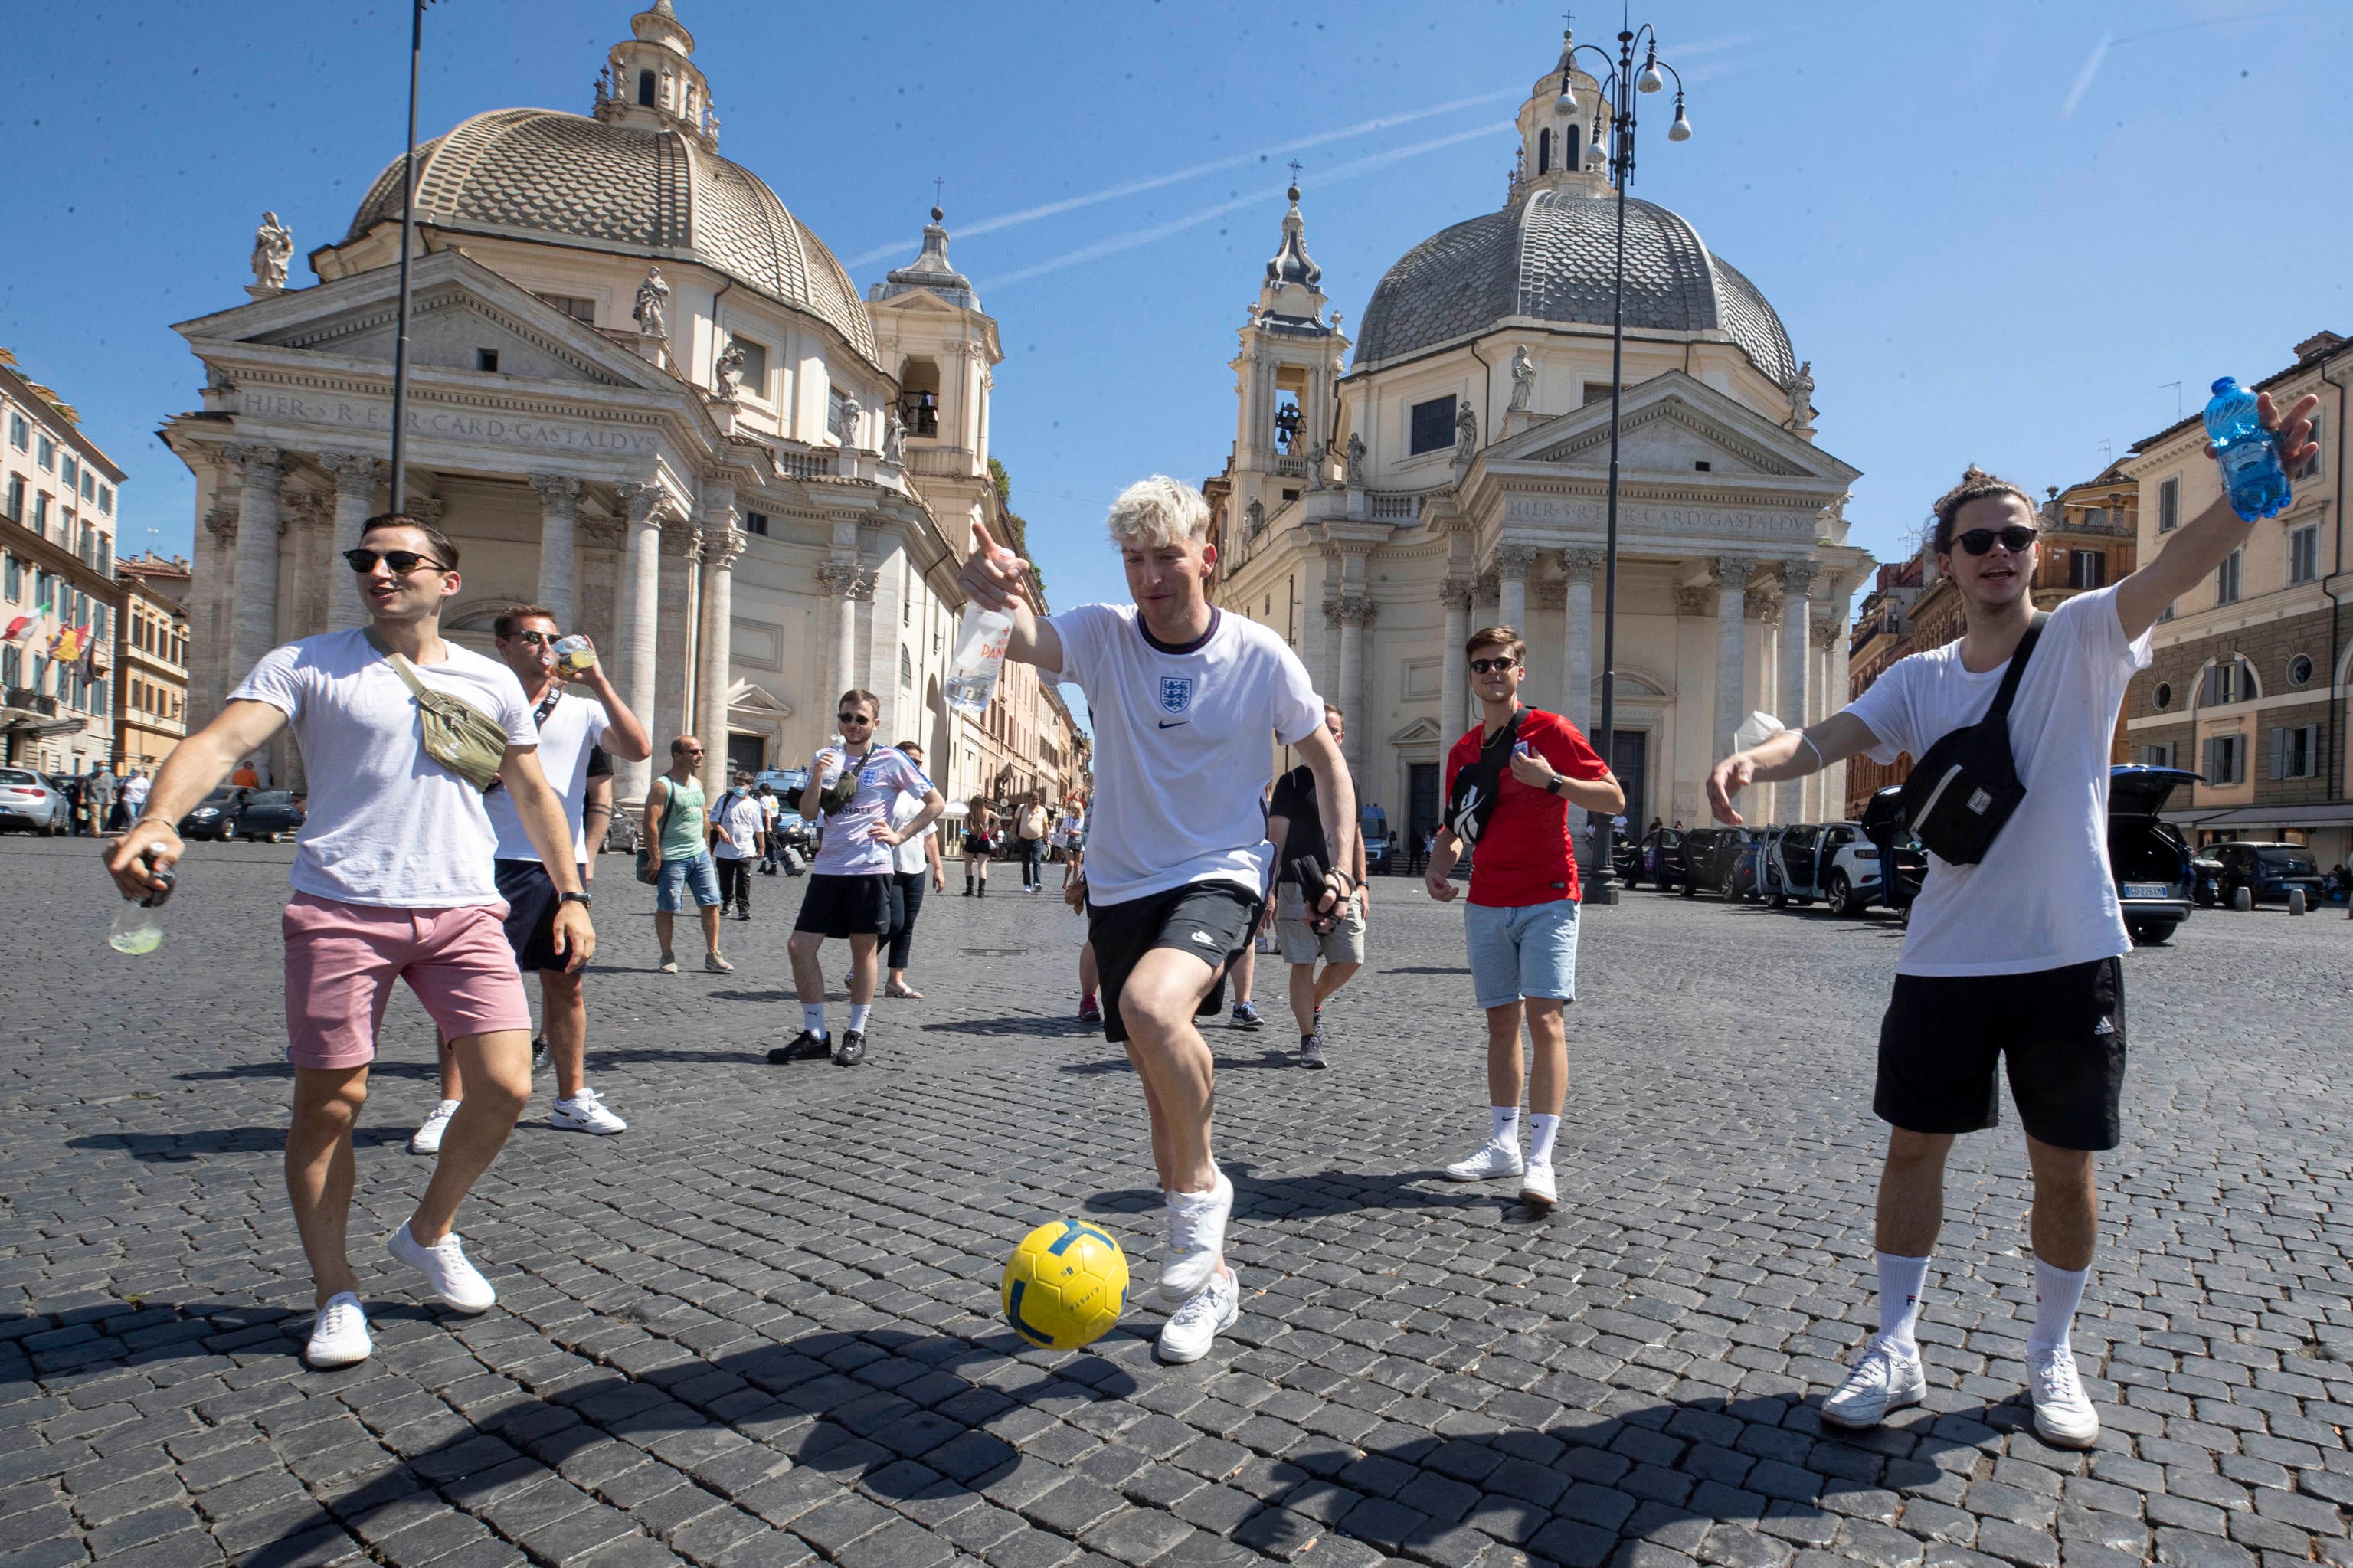 English fans in Rome’s Piazza del Popolo, ahead of the game versus Ukraine